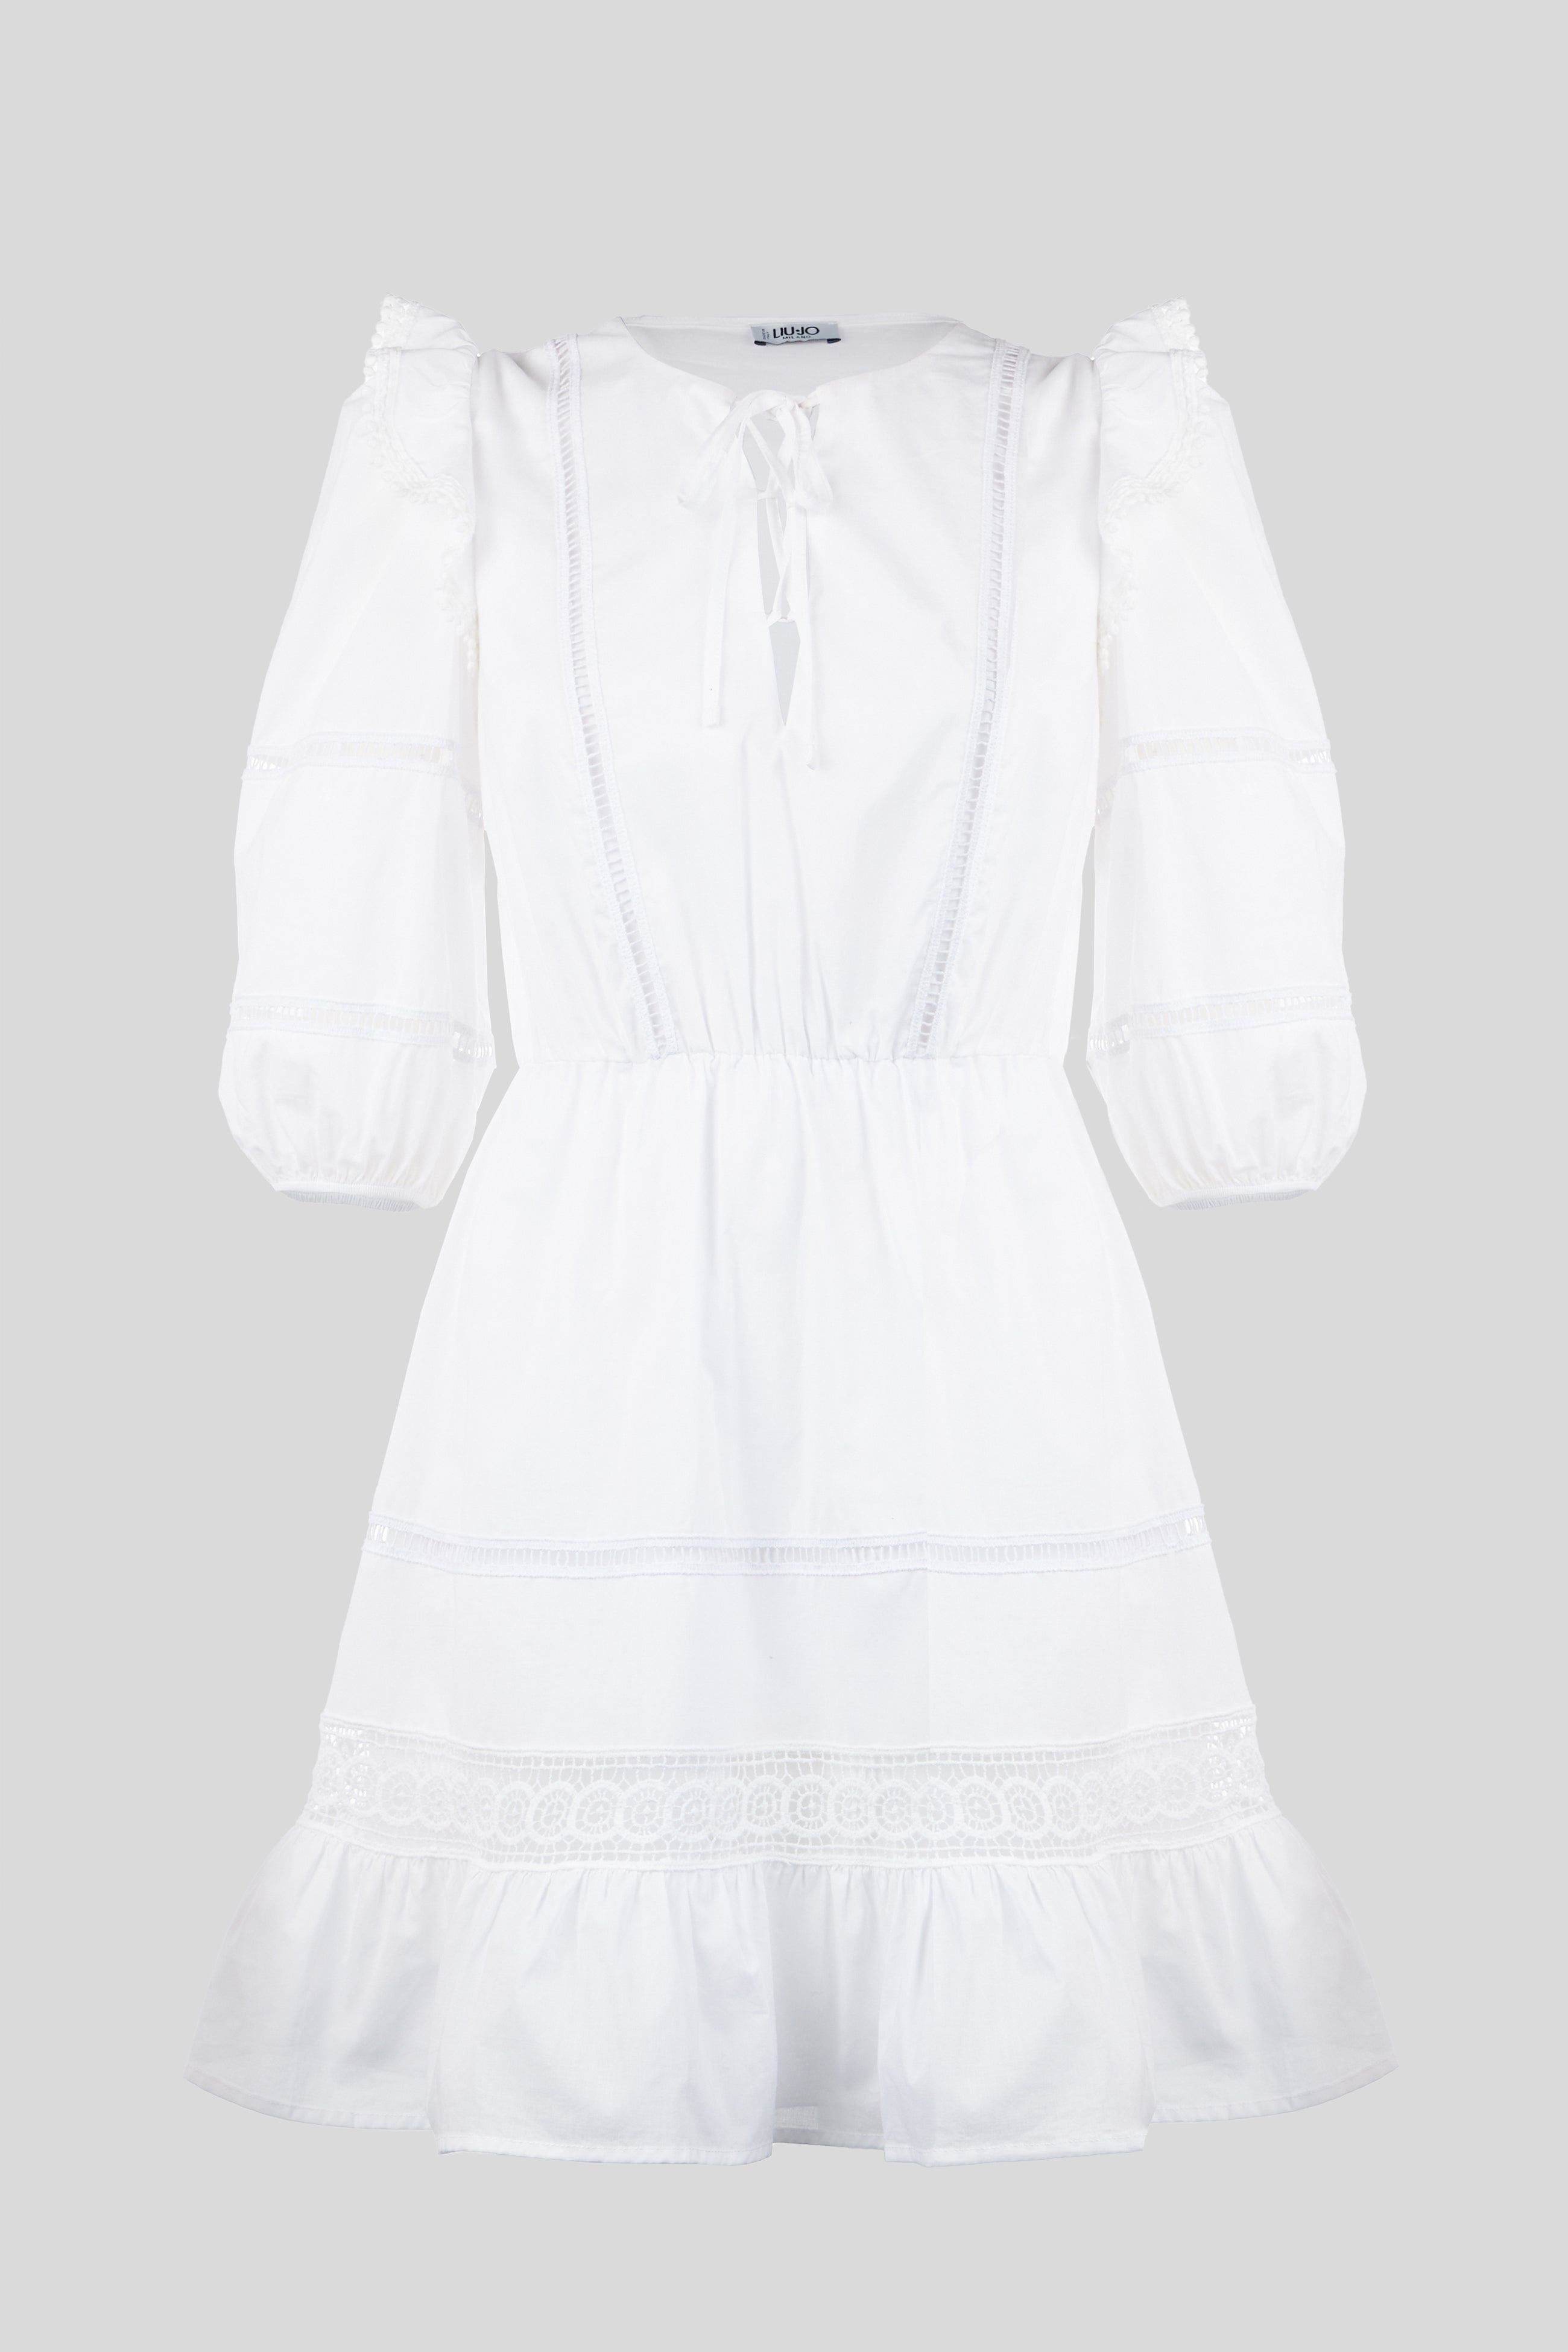 LIU JO Short White Dress